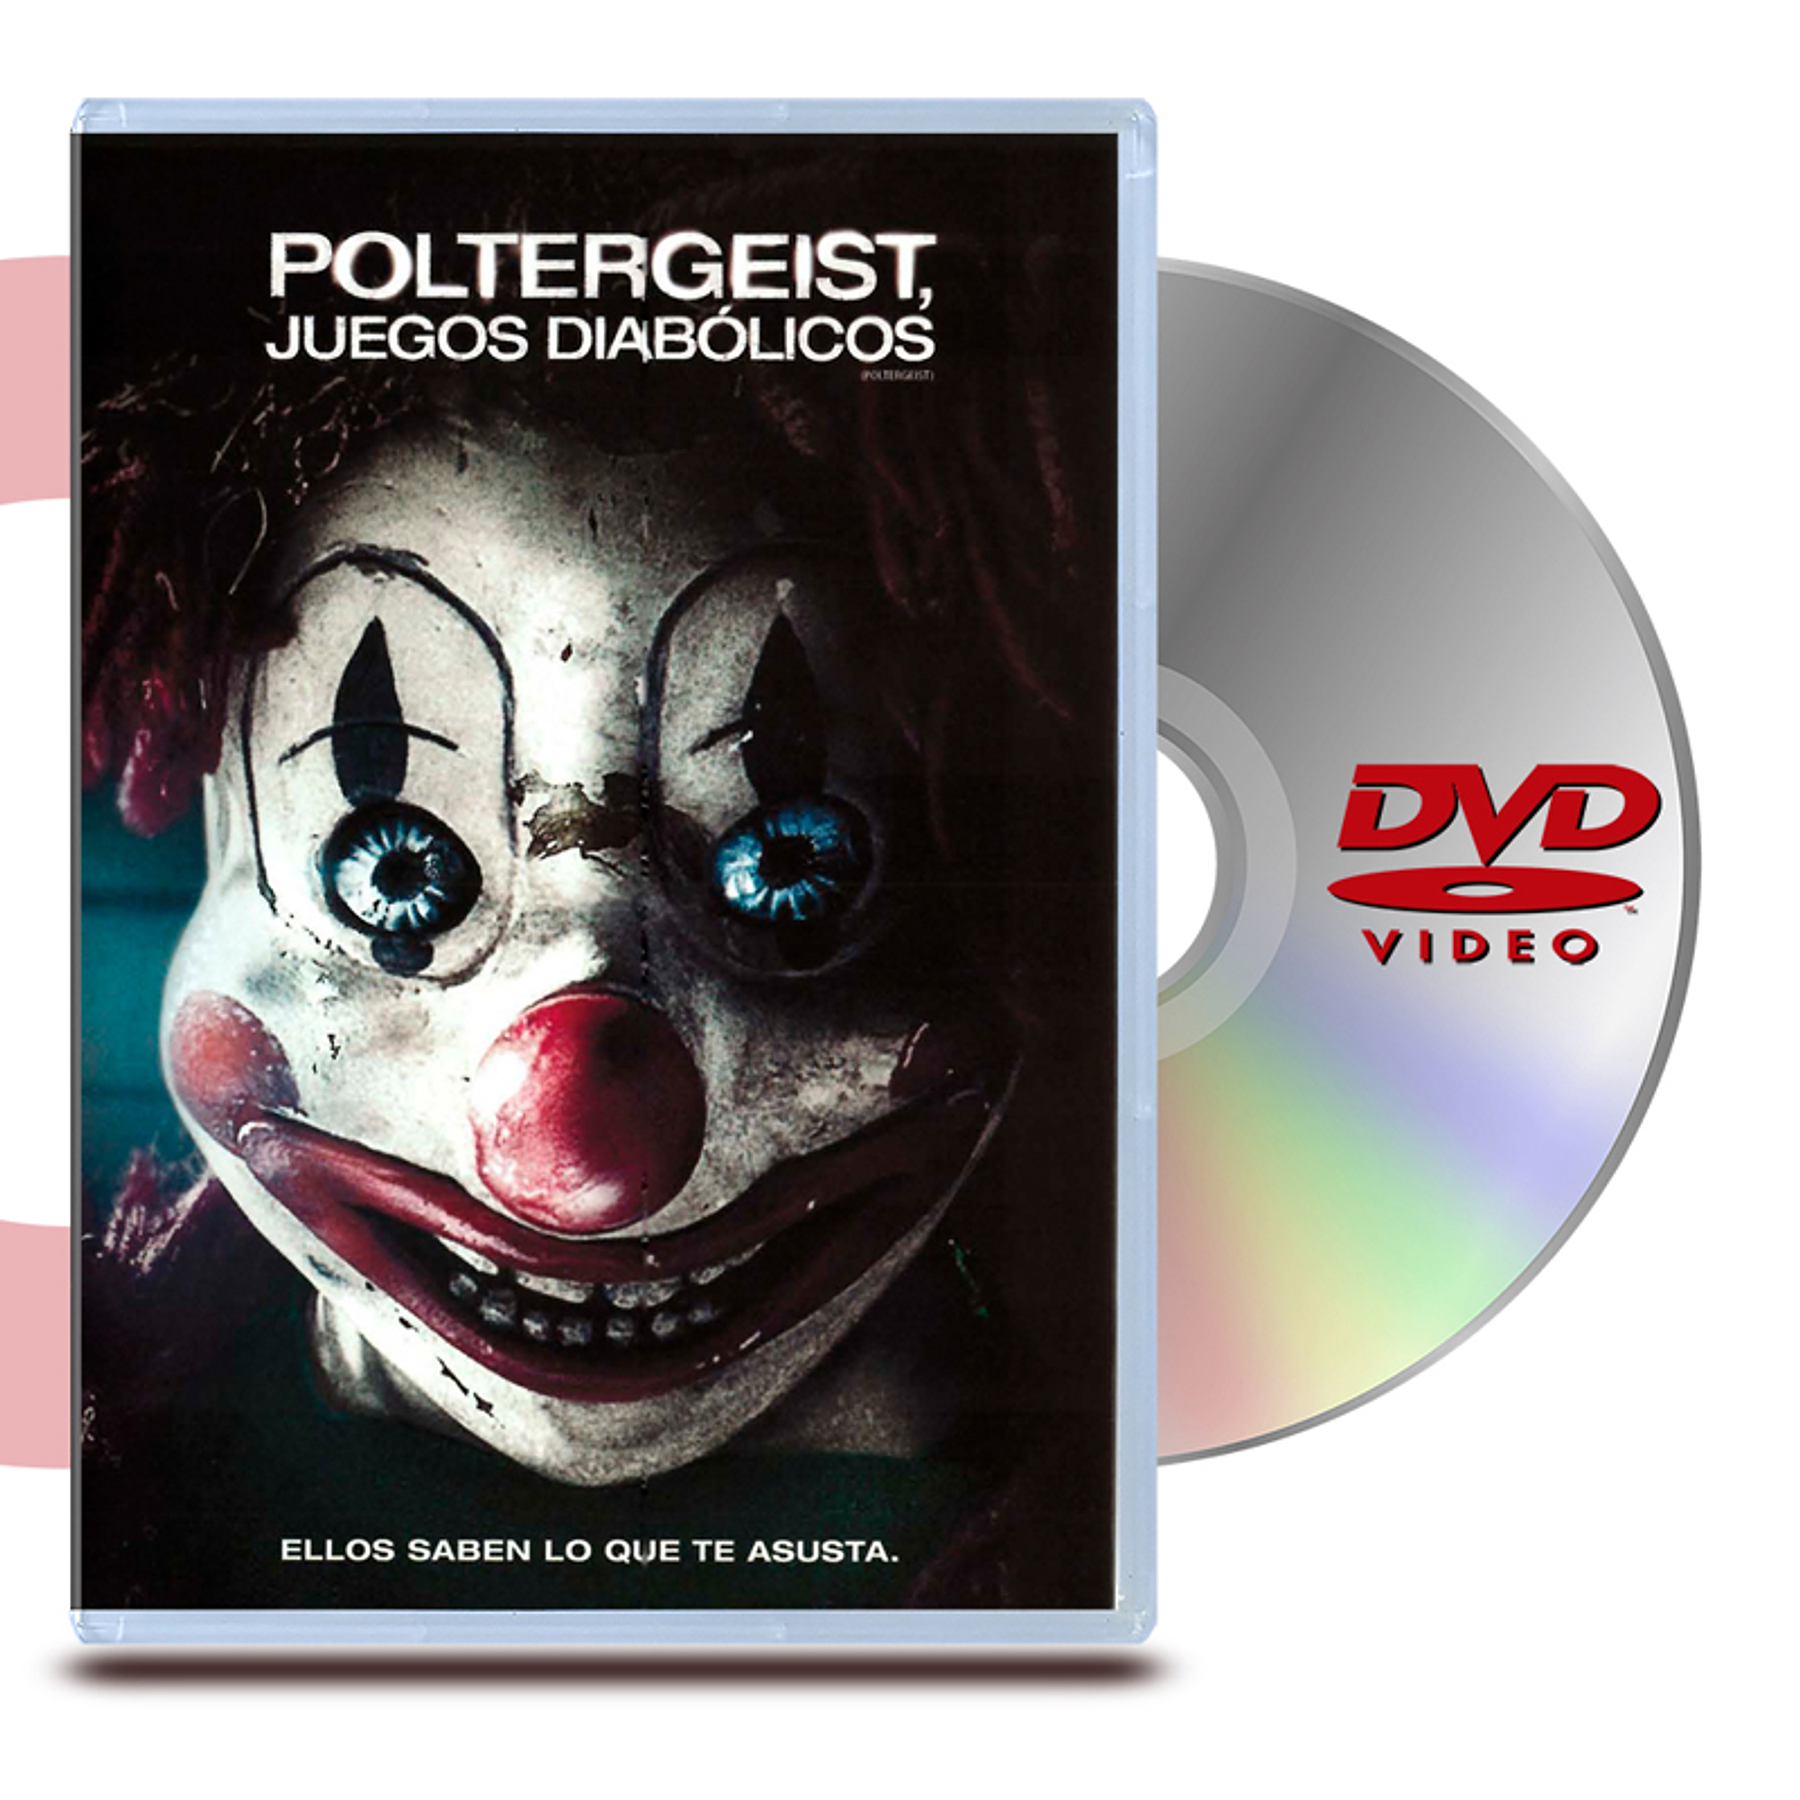 DVD POLTERGEIST JUEGOS DIABOLICOS